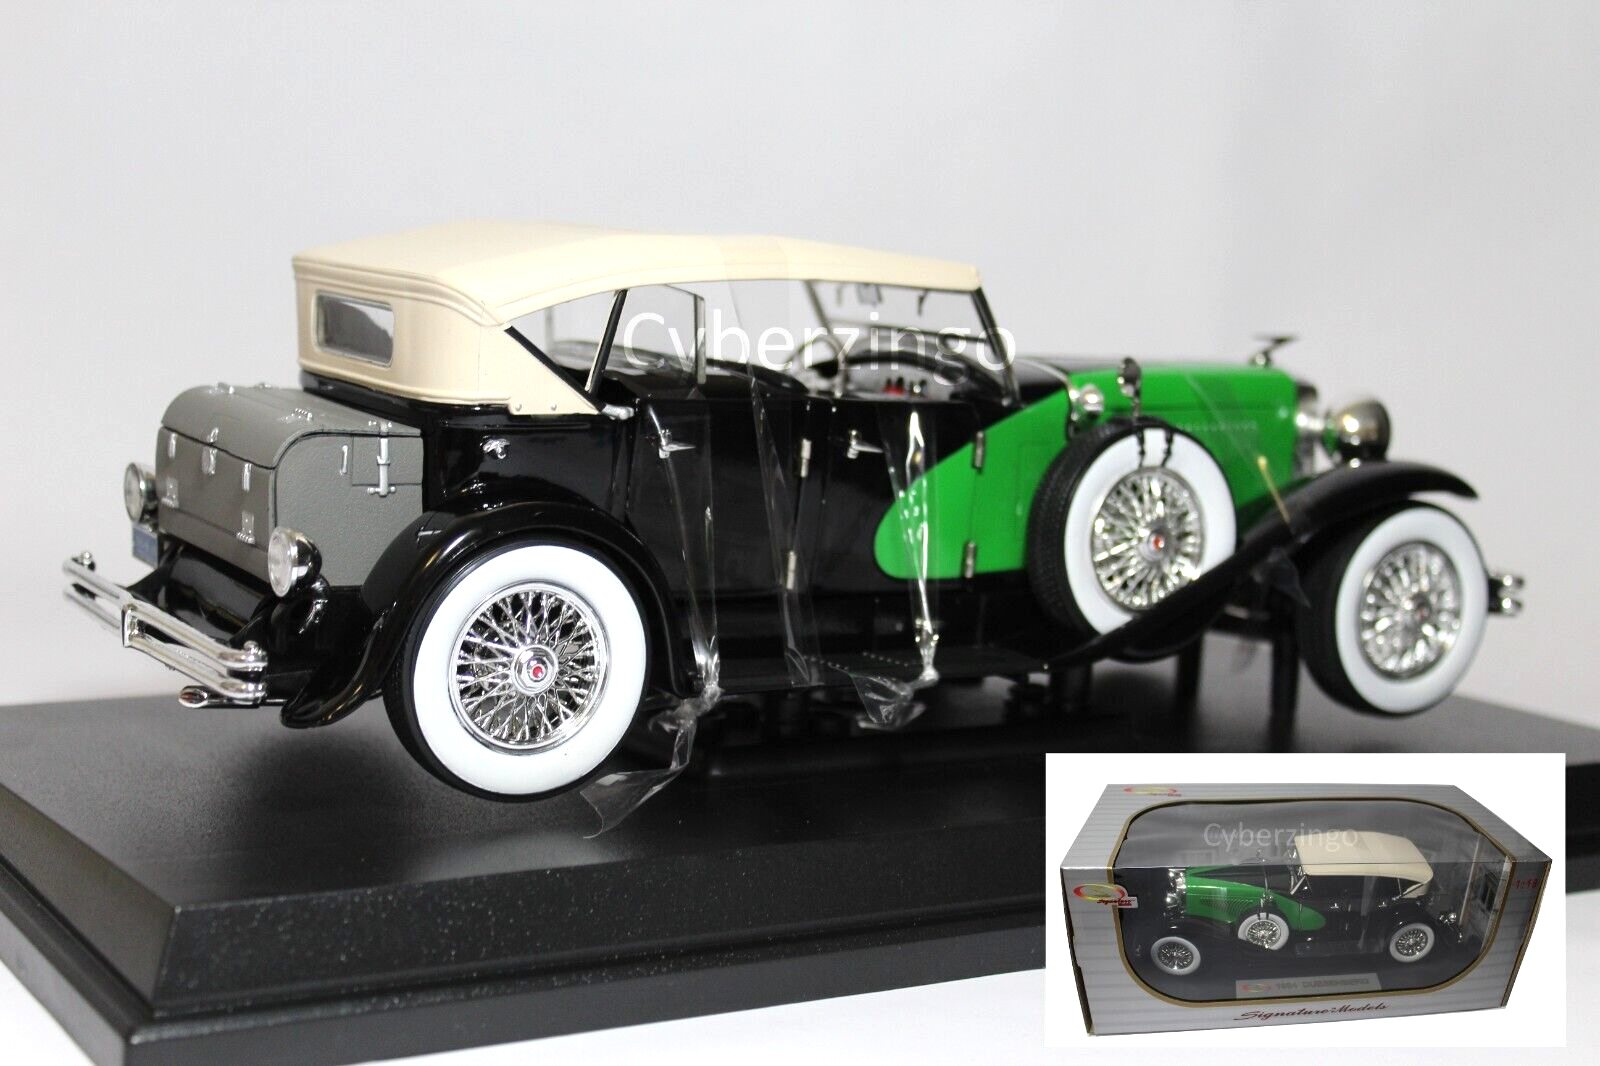 1934 Duesenberg Signature 1:18 Scale Black And Green Diecast Car NEW IN BOX - $69.98